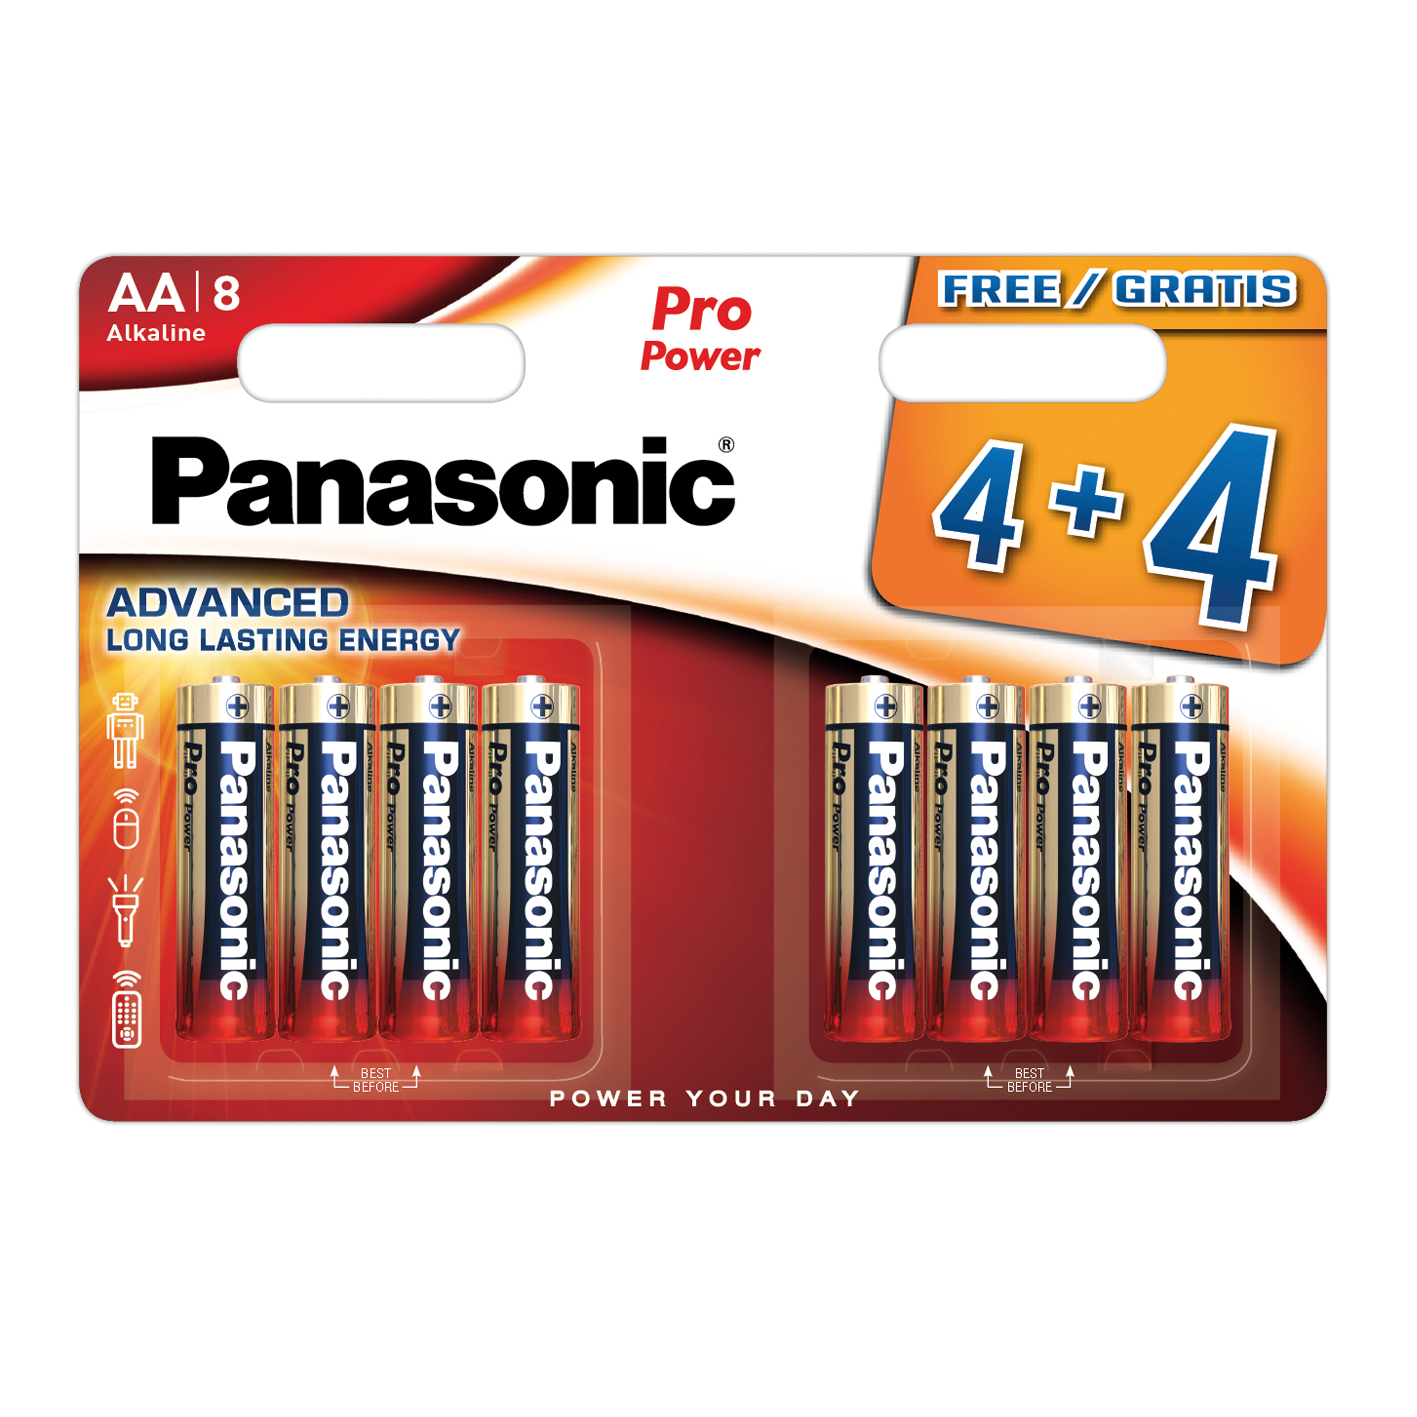 Panasonic AA Pro Power, Pack of 4+4